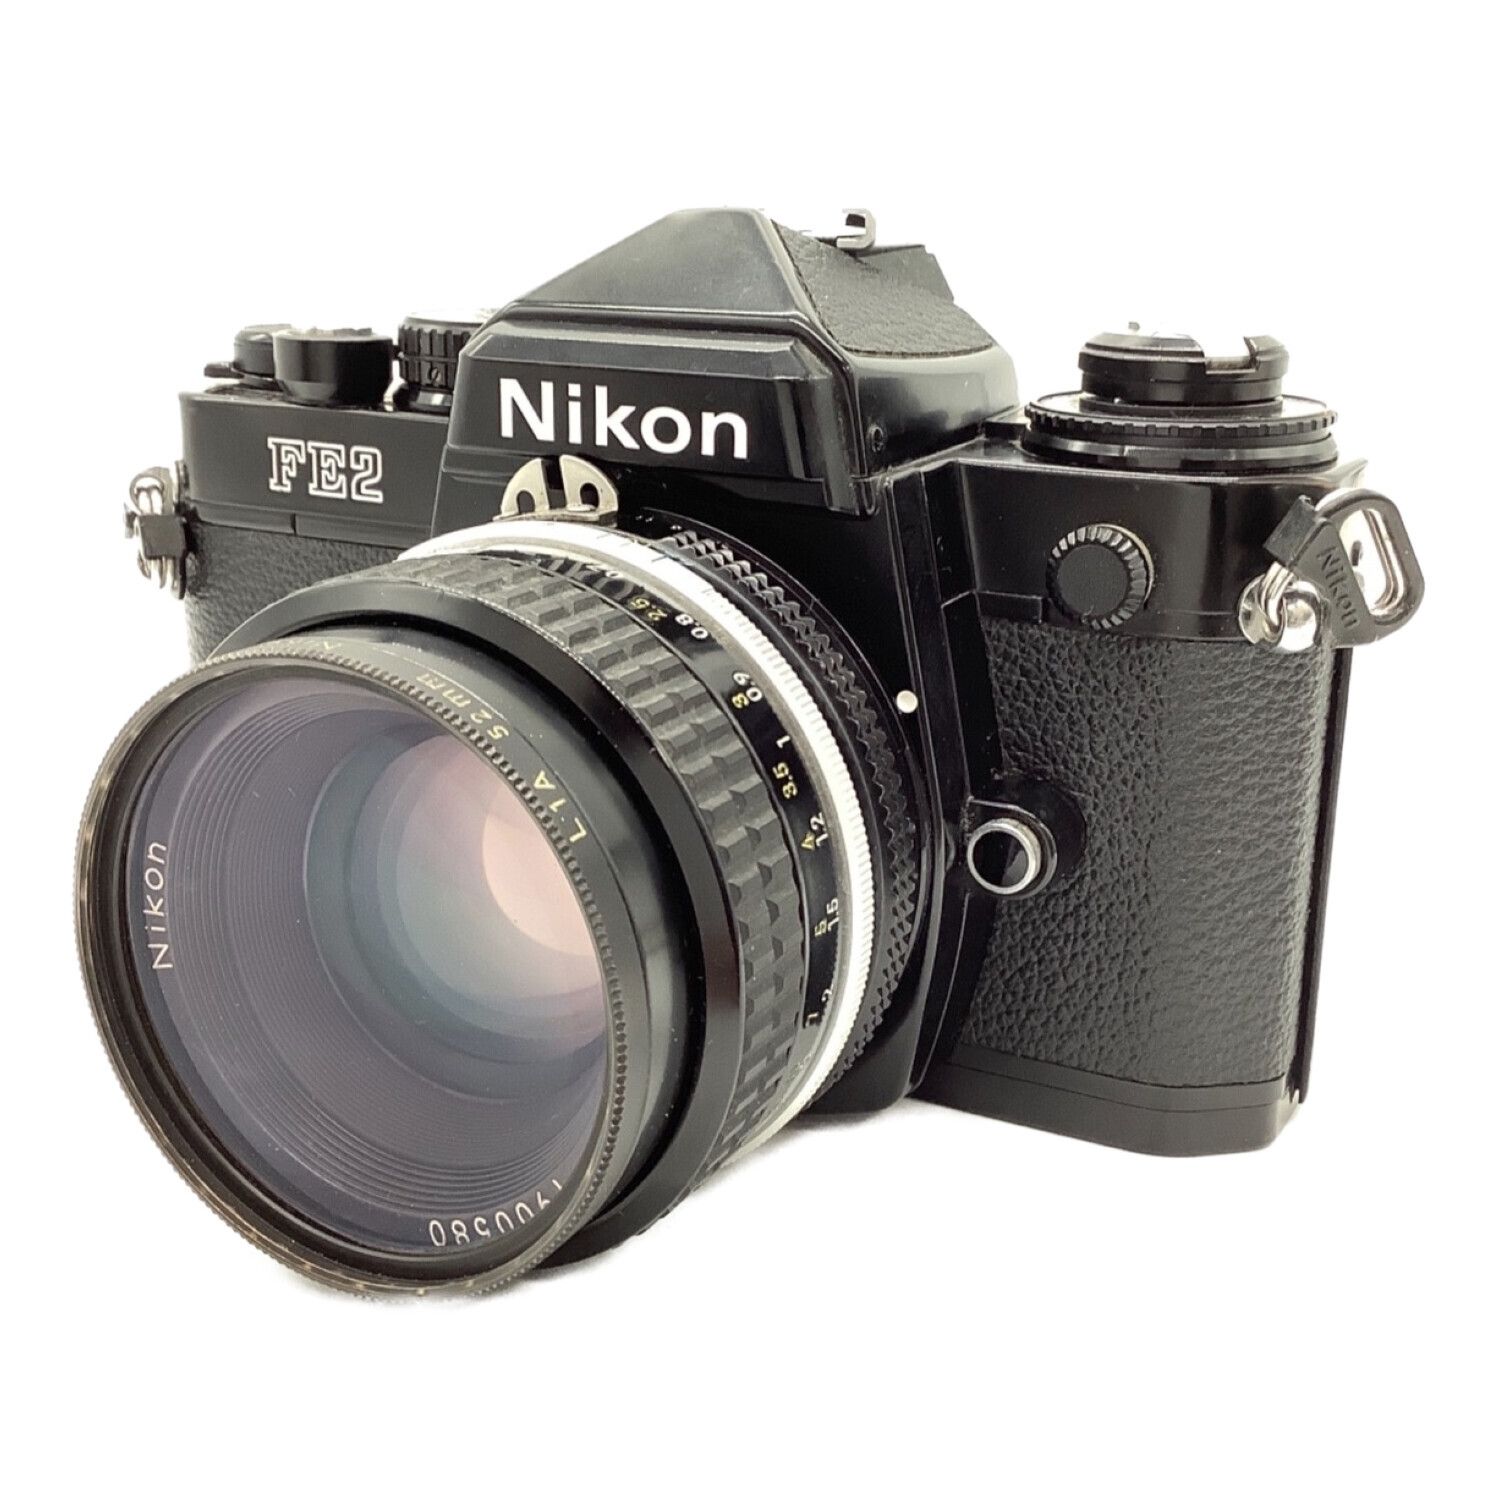 Nikon (ニコン) レトロフィルムカメラ FE2 レンズ:NIKKOR 1:1.8 50